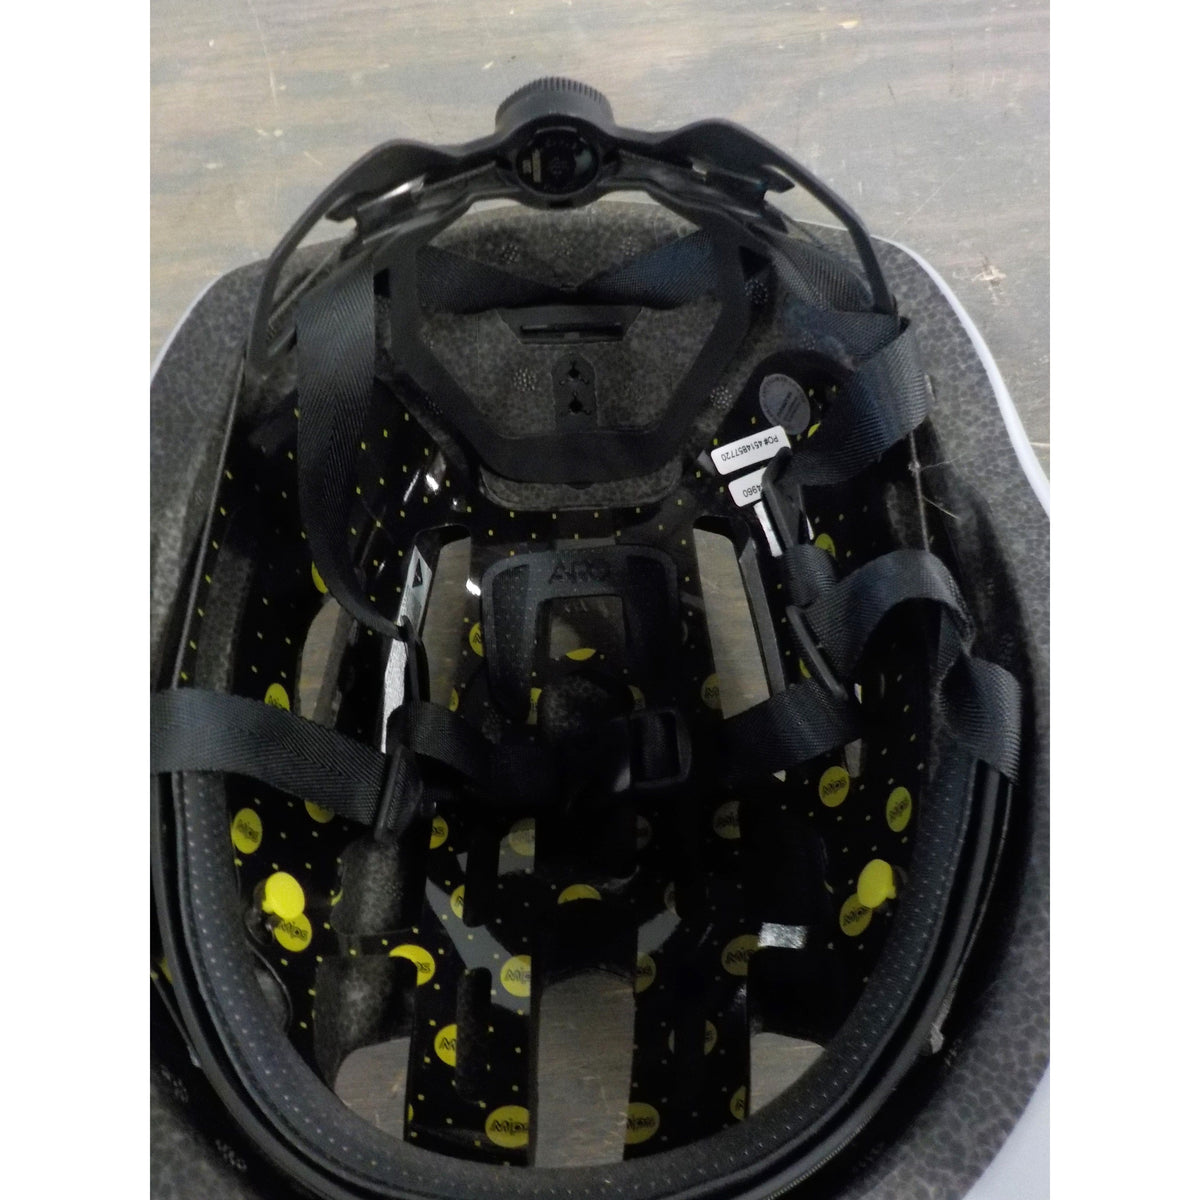 Oakley ARO3 Helmet - Fog Gray - Medium - Used - Acceptable